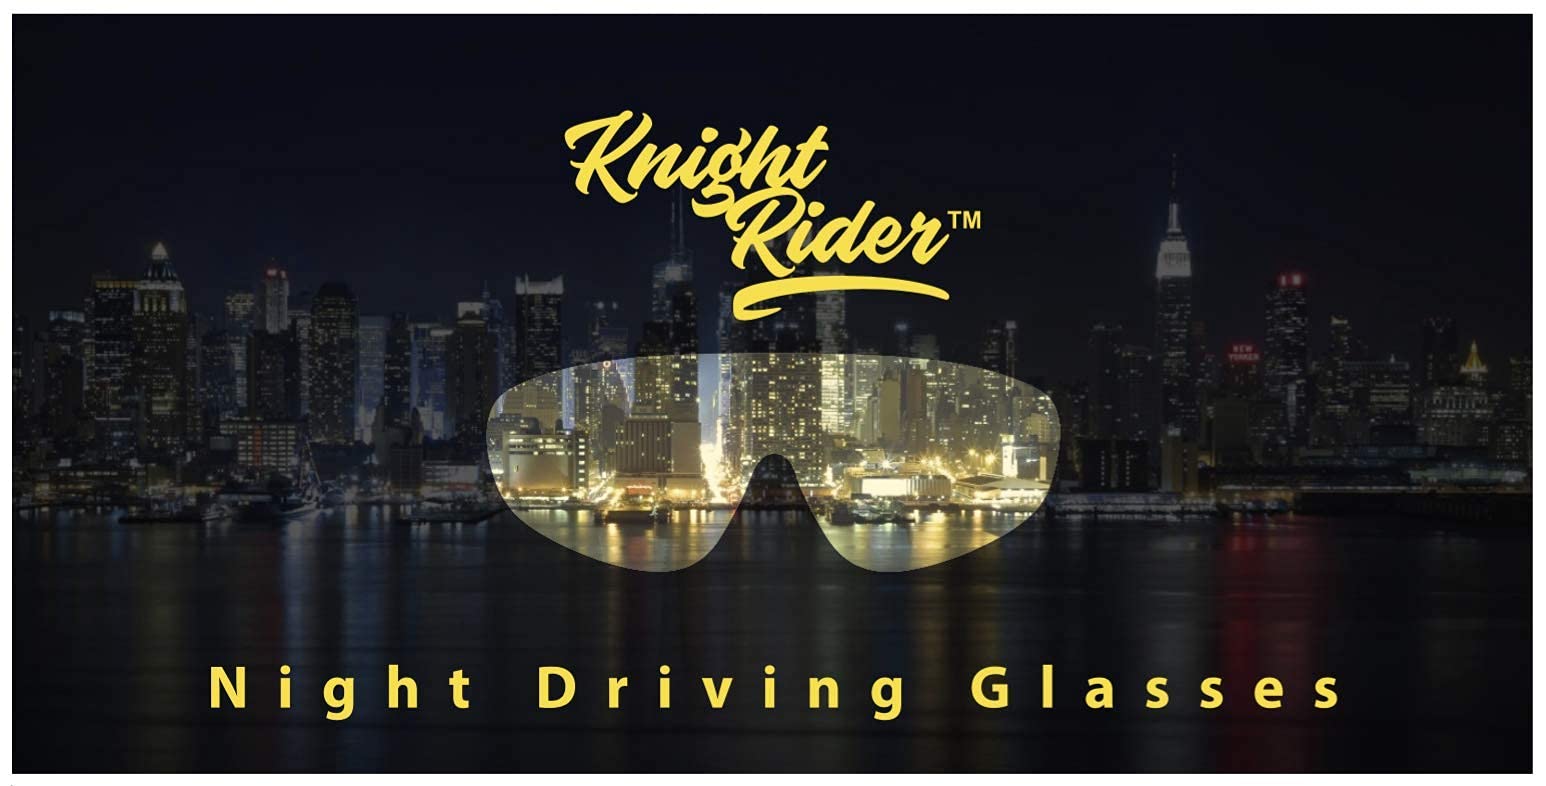 Intellilens Night Driving HD Vision Polarized Sunglasses for Men and Women | Anti Glare 100% UV Protection Glass for Men and Women for Riding Sports Outdoors